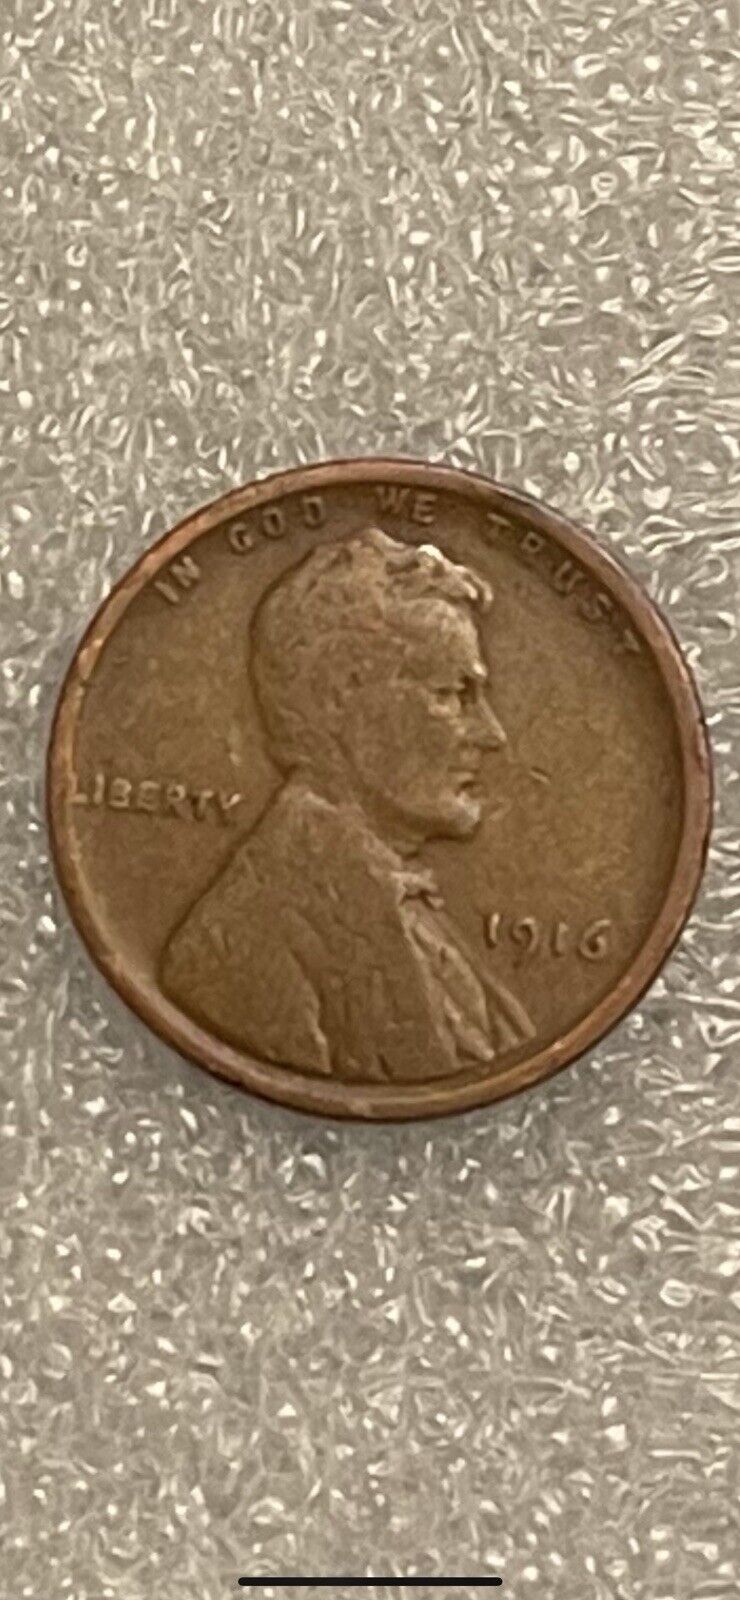 Extremely Rare 1916 Wheat Penny No Mint Mark Liberty Error.